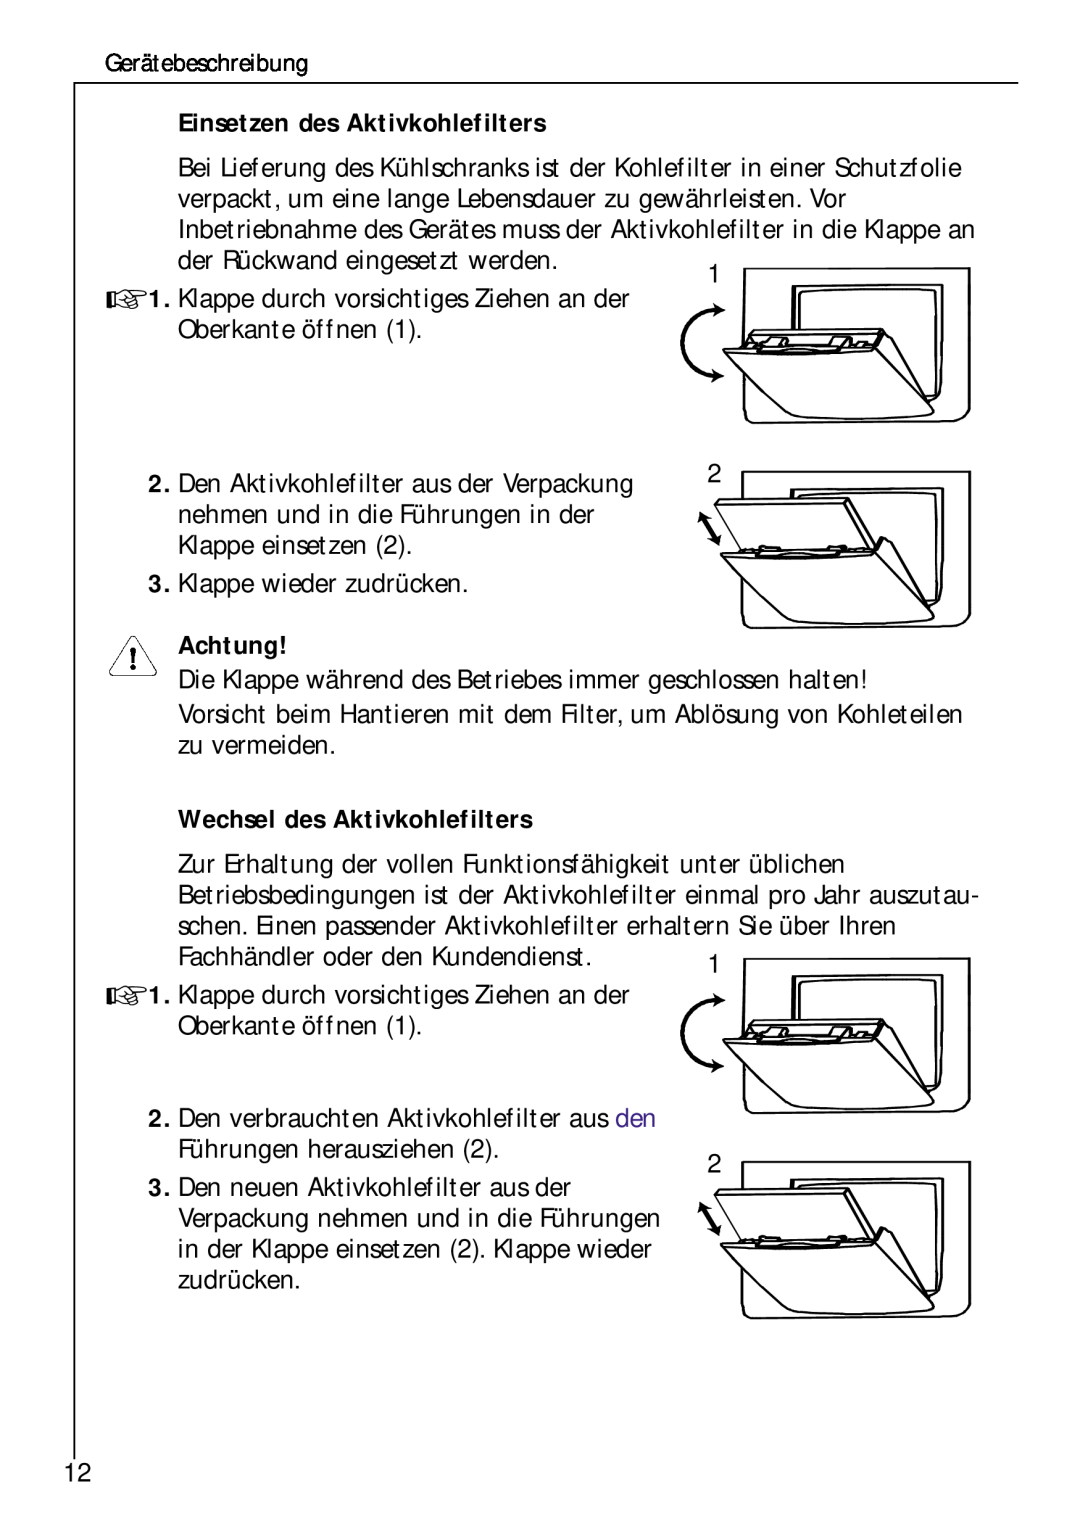 Electrolux Z 9 18 42-4 I user manual Einsetzen des Aktivkohlefilters, Wechsel des Aktivkohlefilters, Achtung 